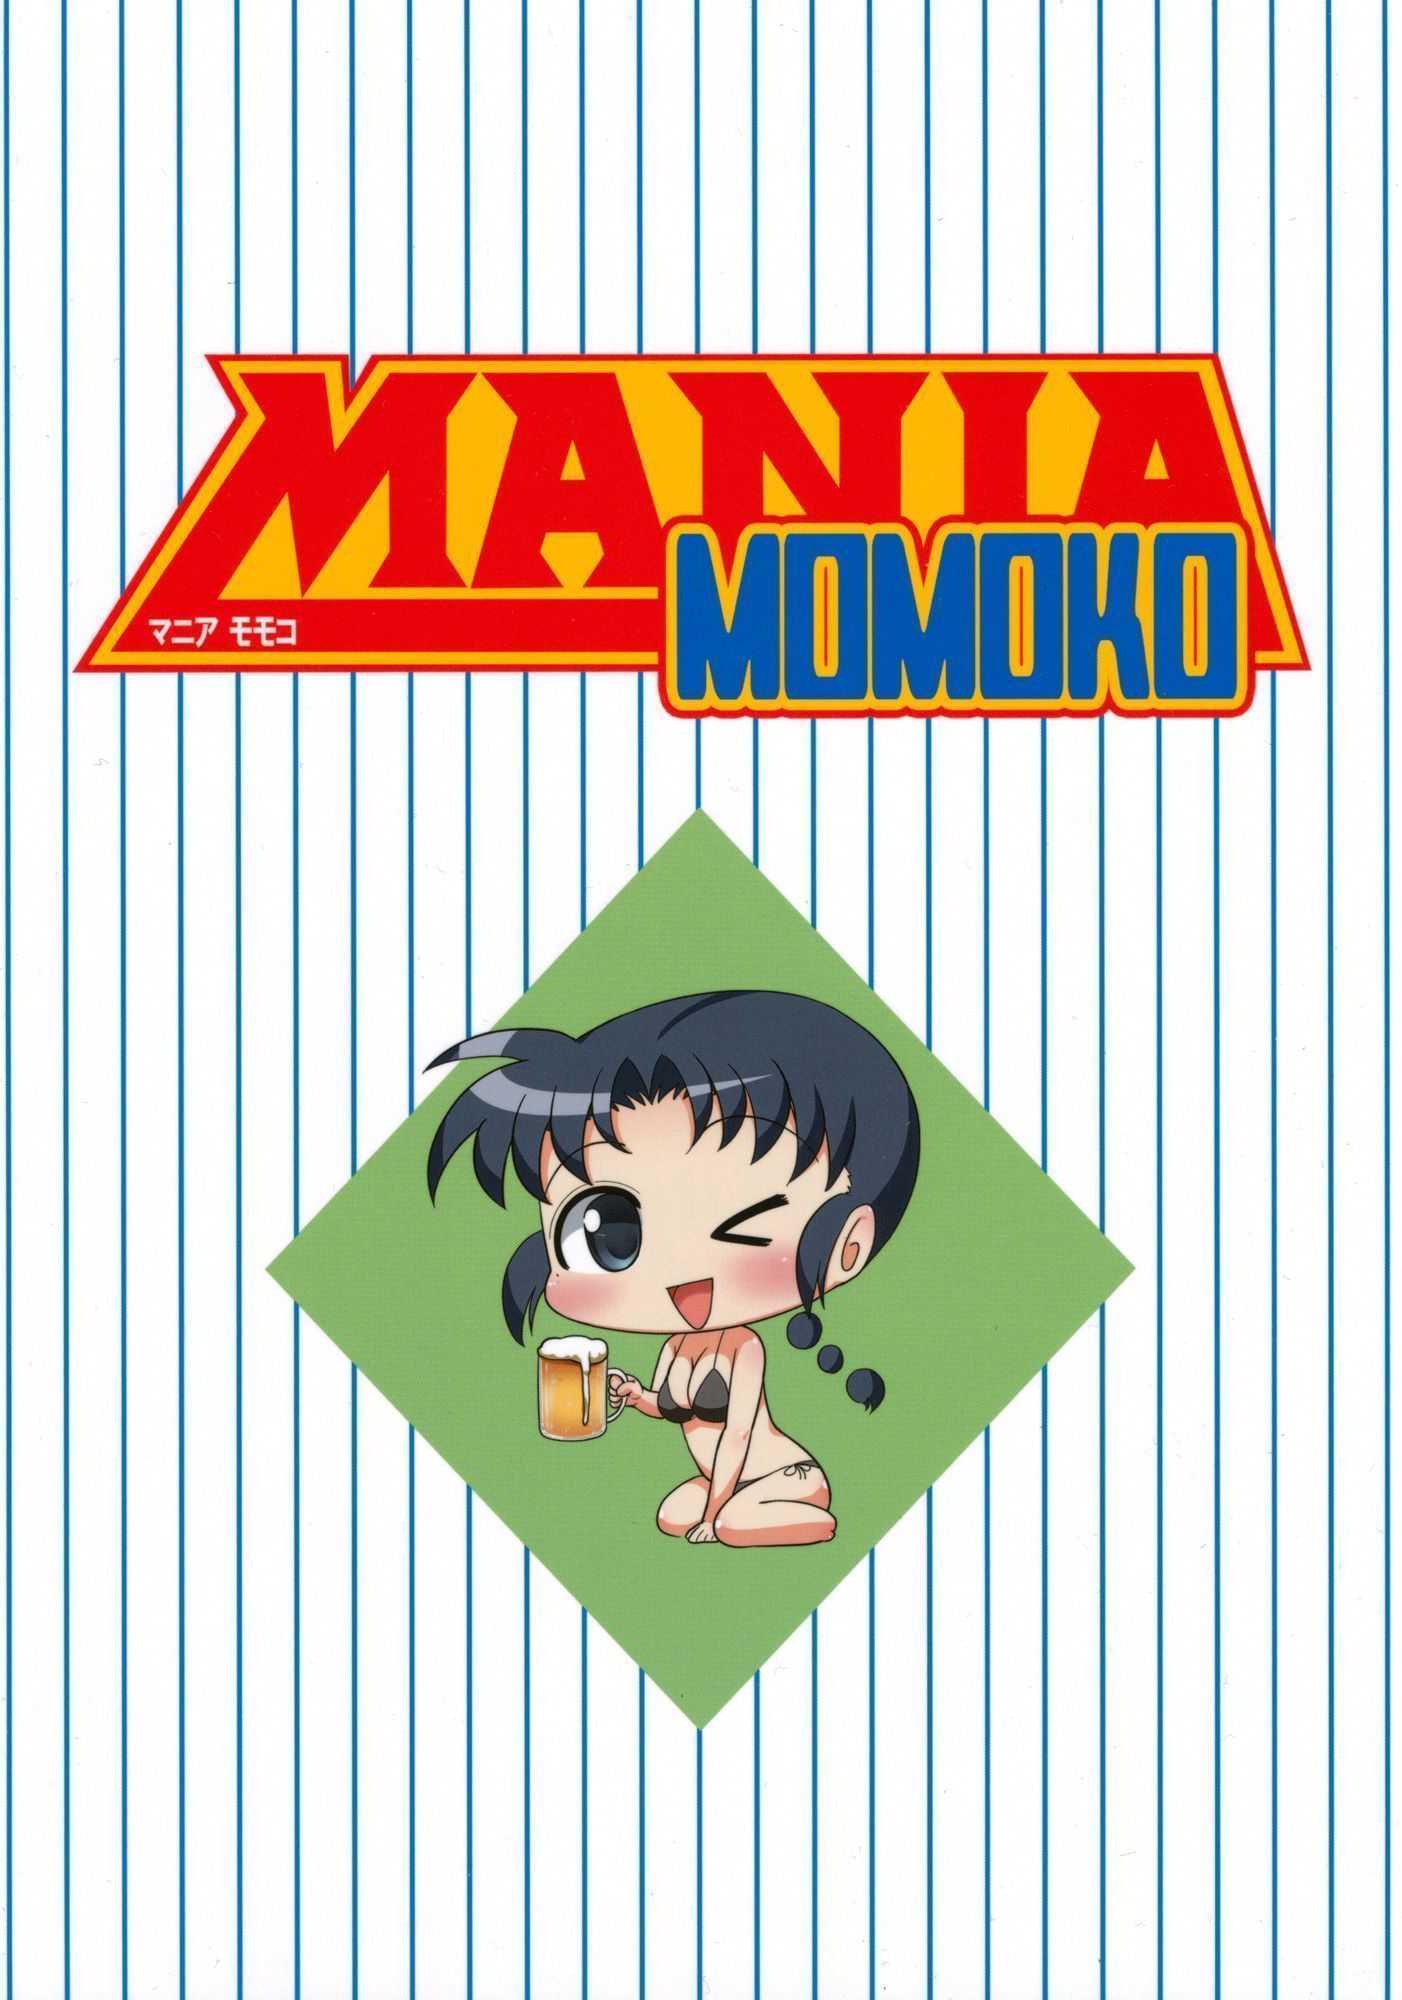 Mania Momoko